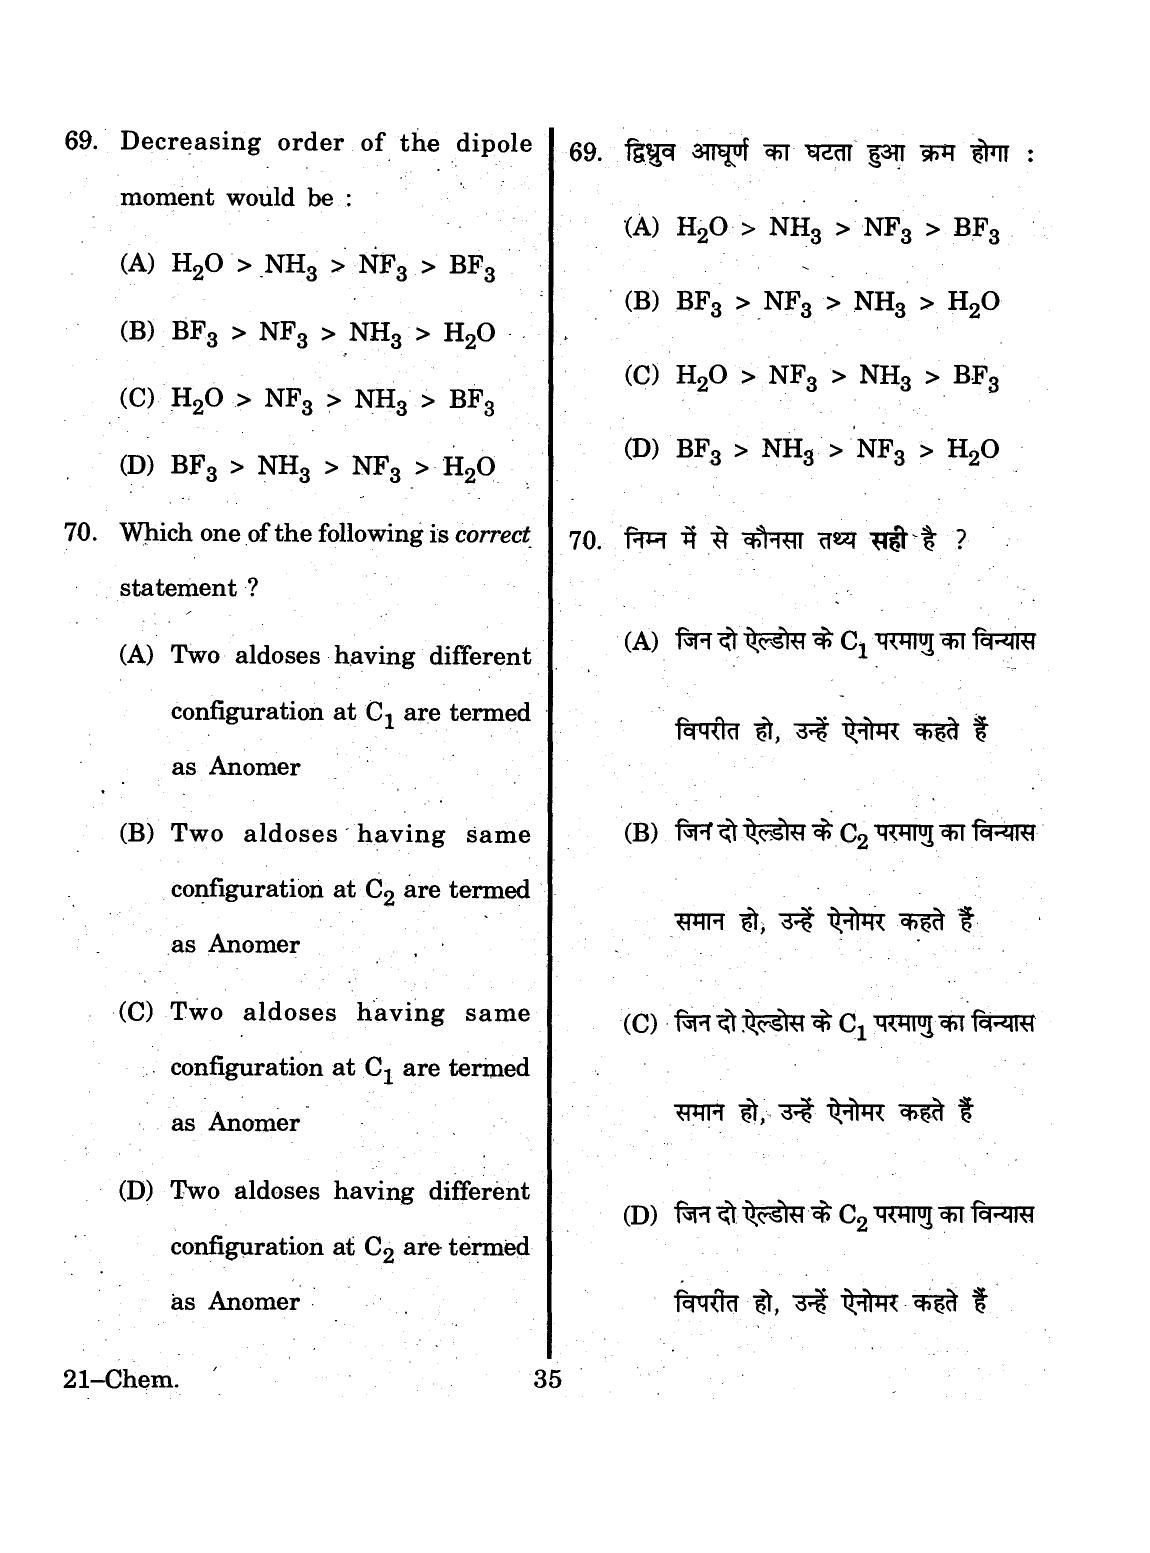 URATPG 2015 Chemisty Question Paper - Page 35